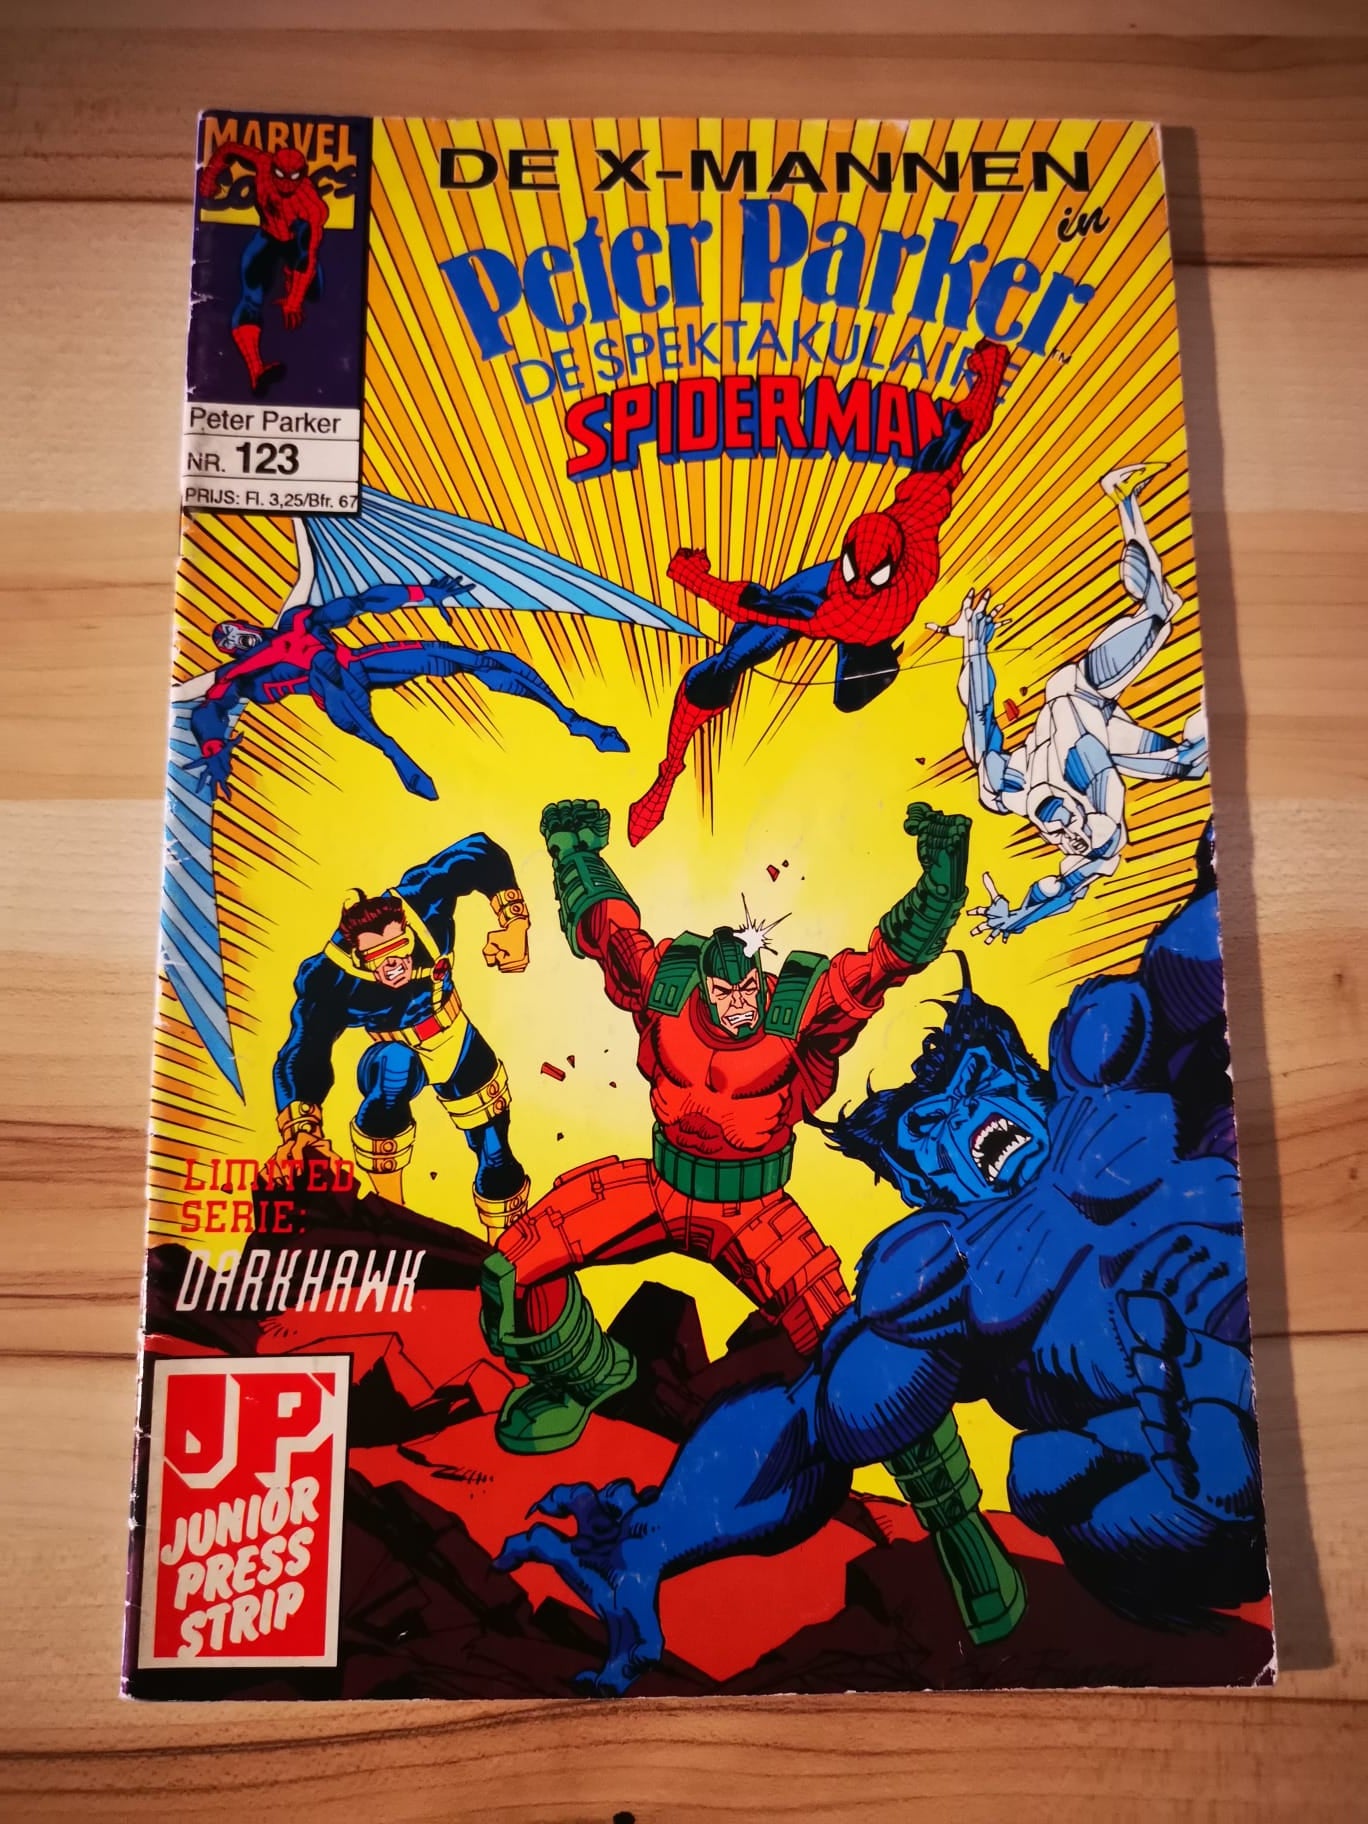 Peter Parker De spektakulaire spiderman #123